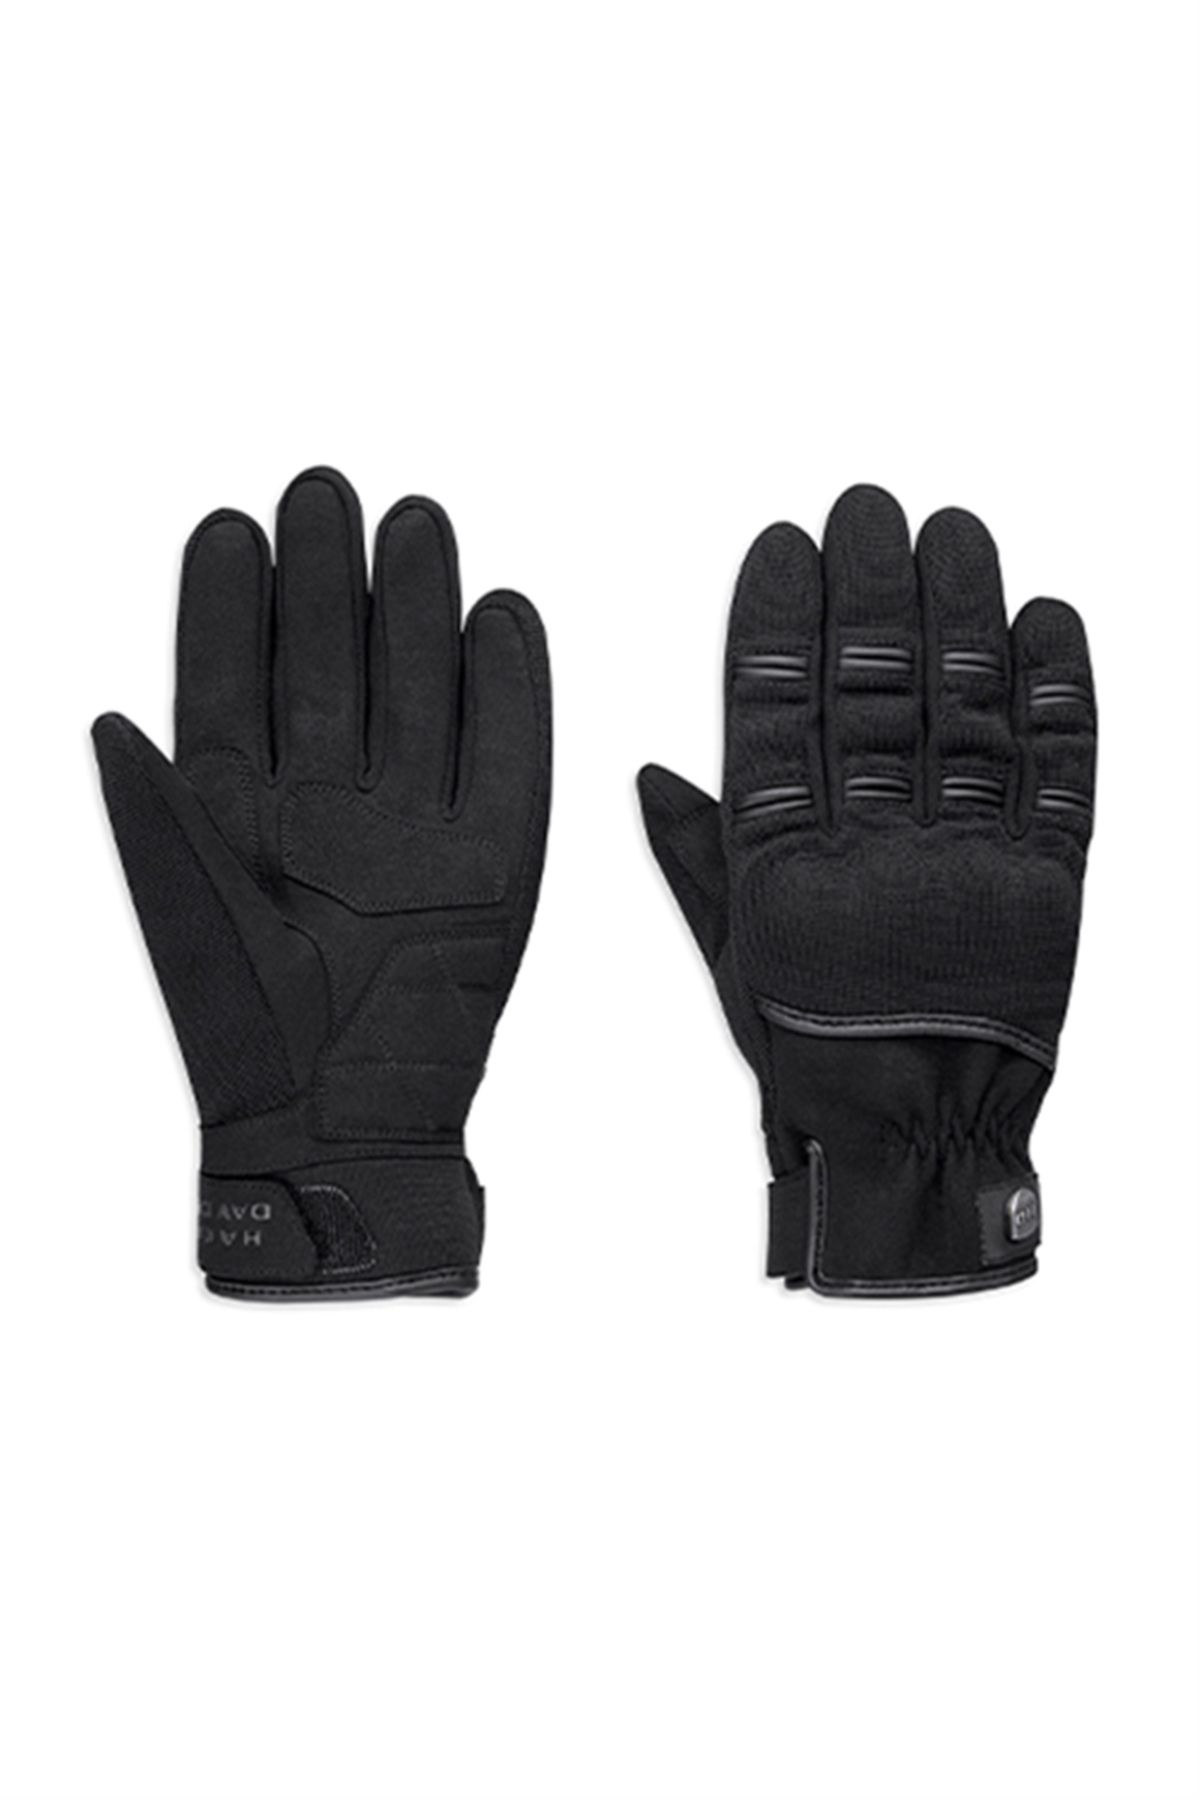 Harley Davidson Harley-davidson Men's Sarona Full-finger Gloves